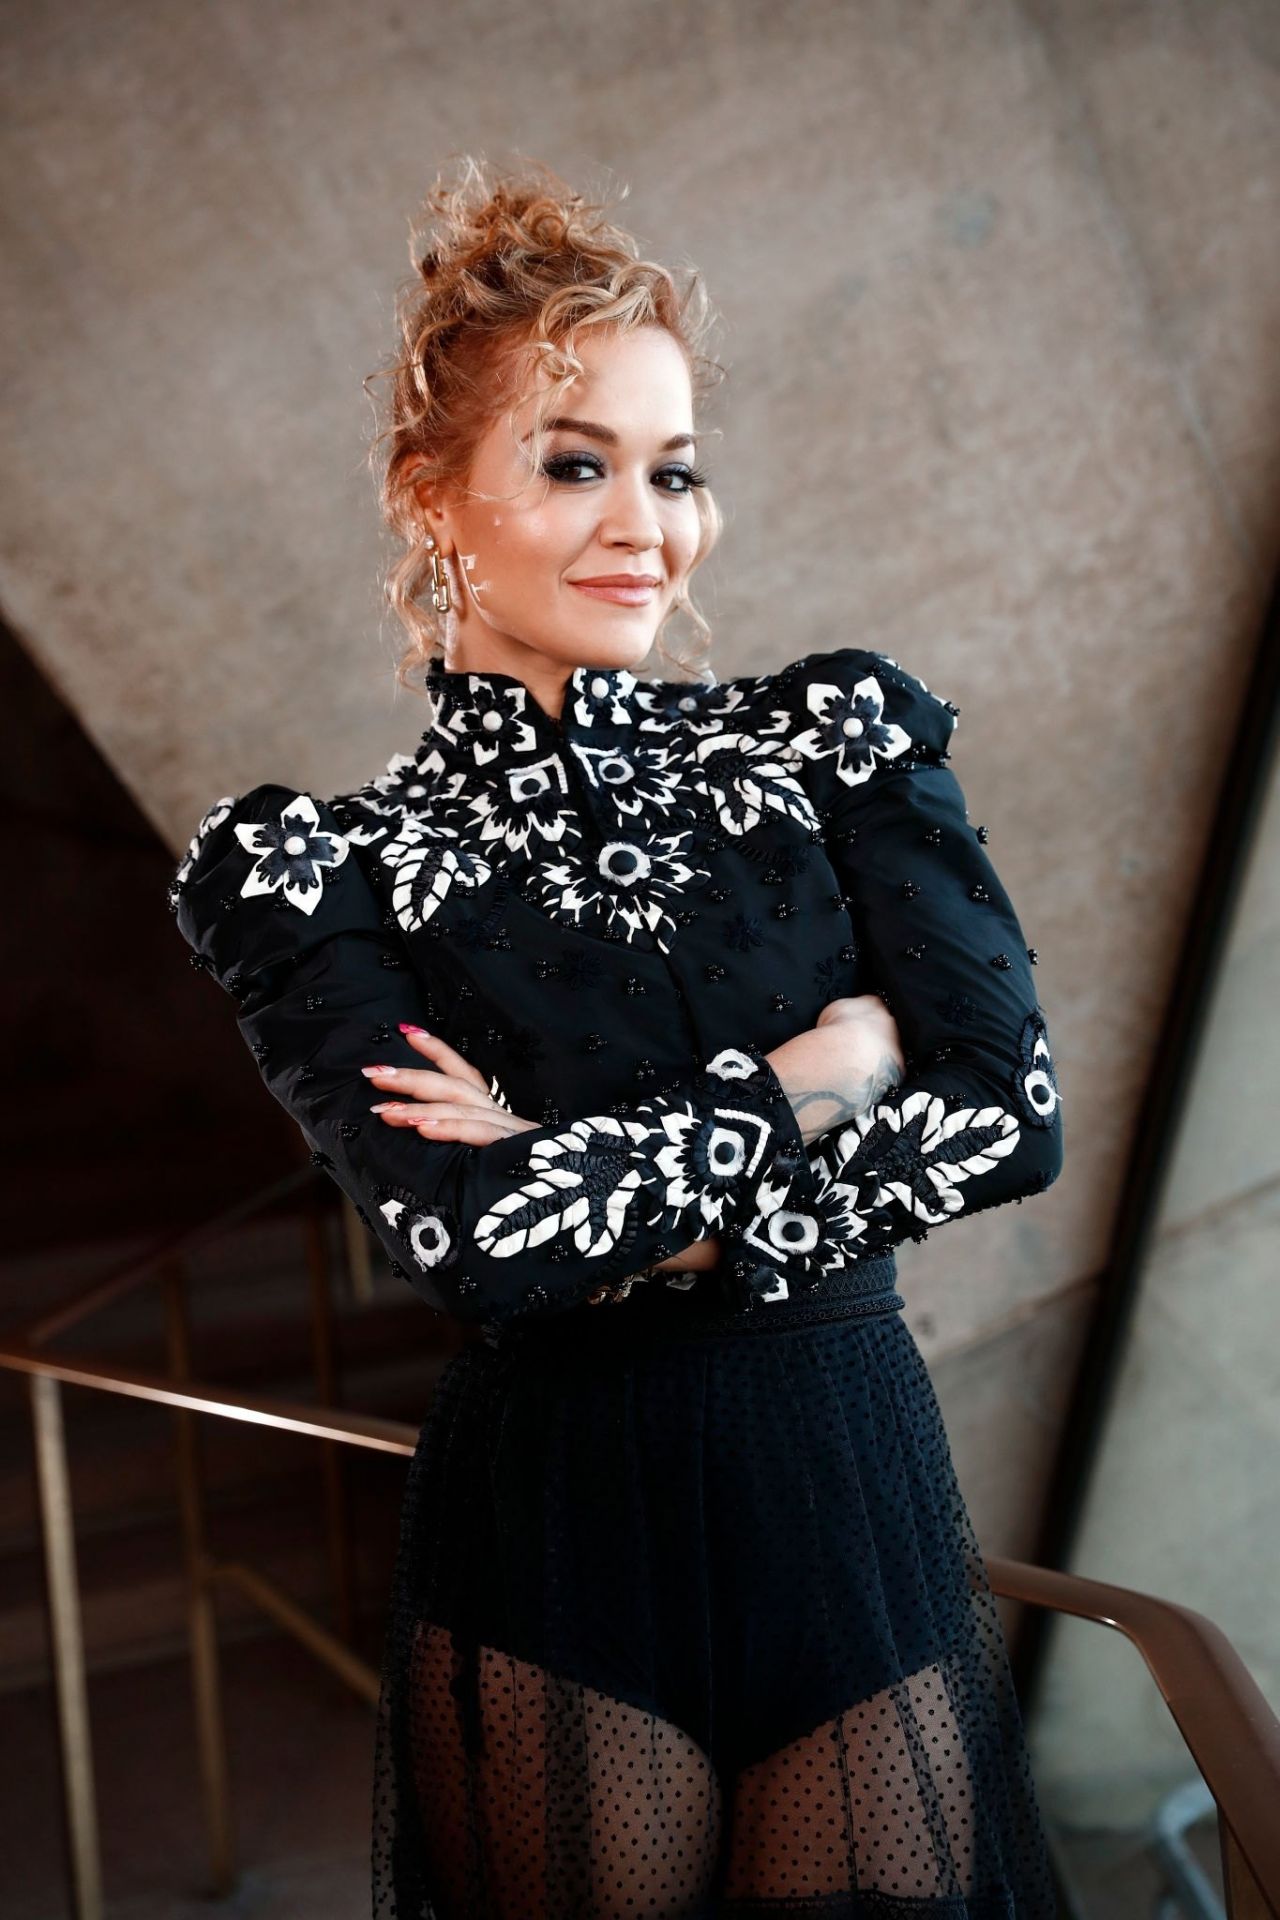 Rita Ora Photoshoot 2021 Wallpapers